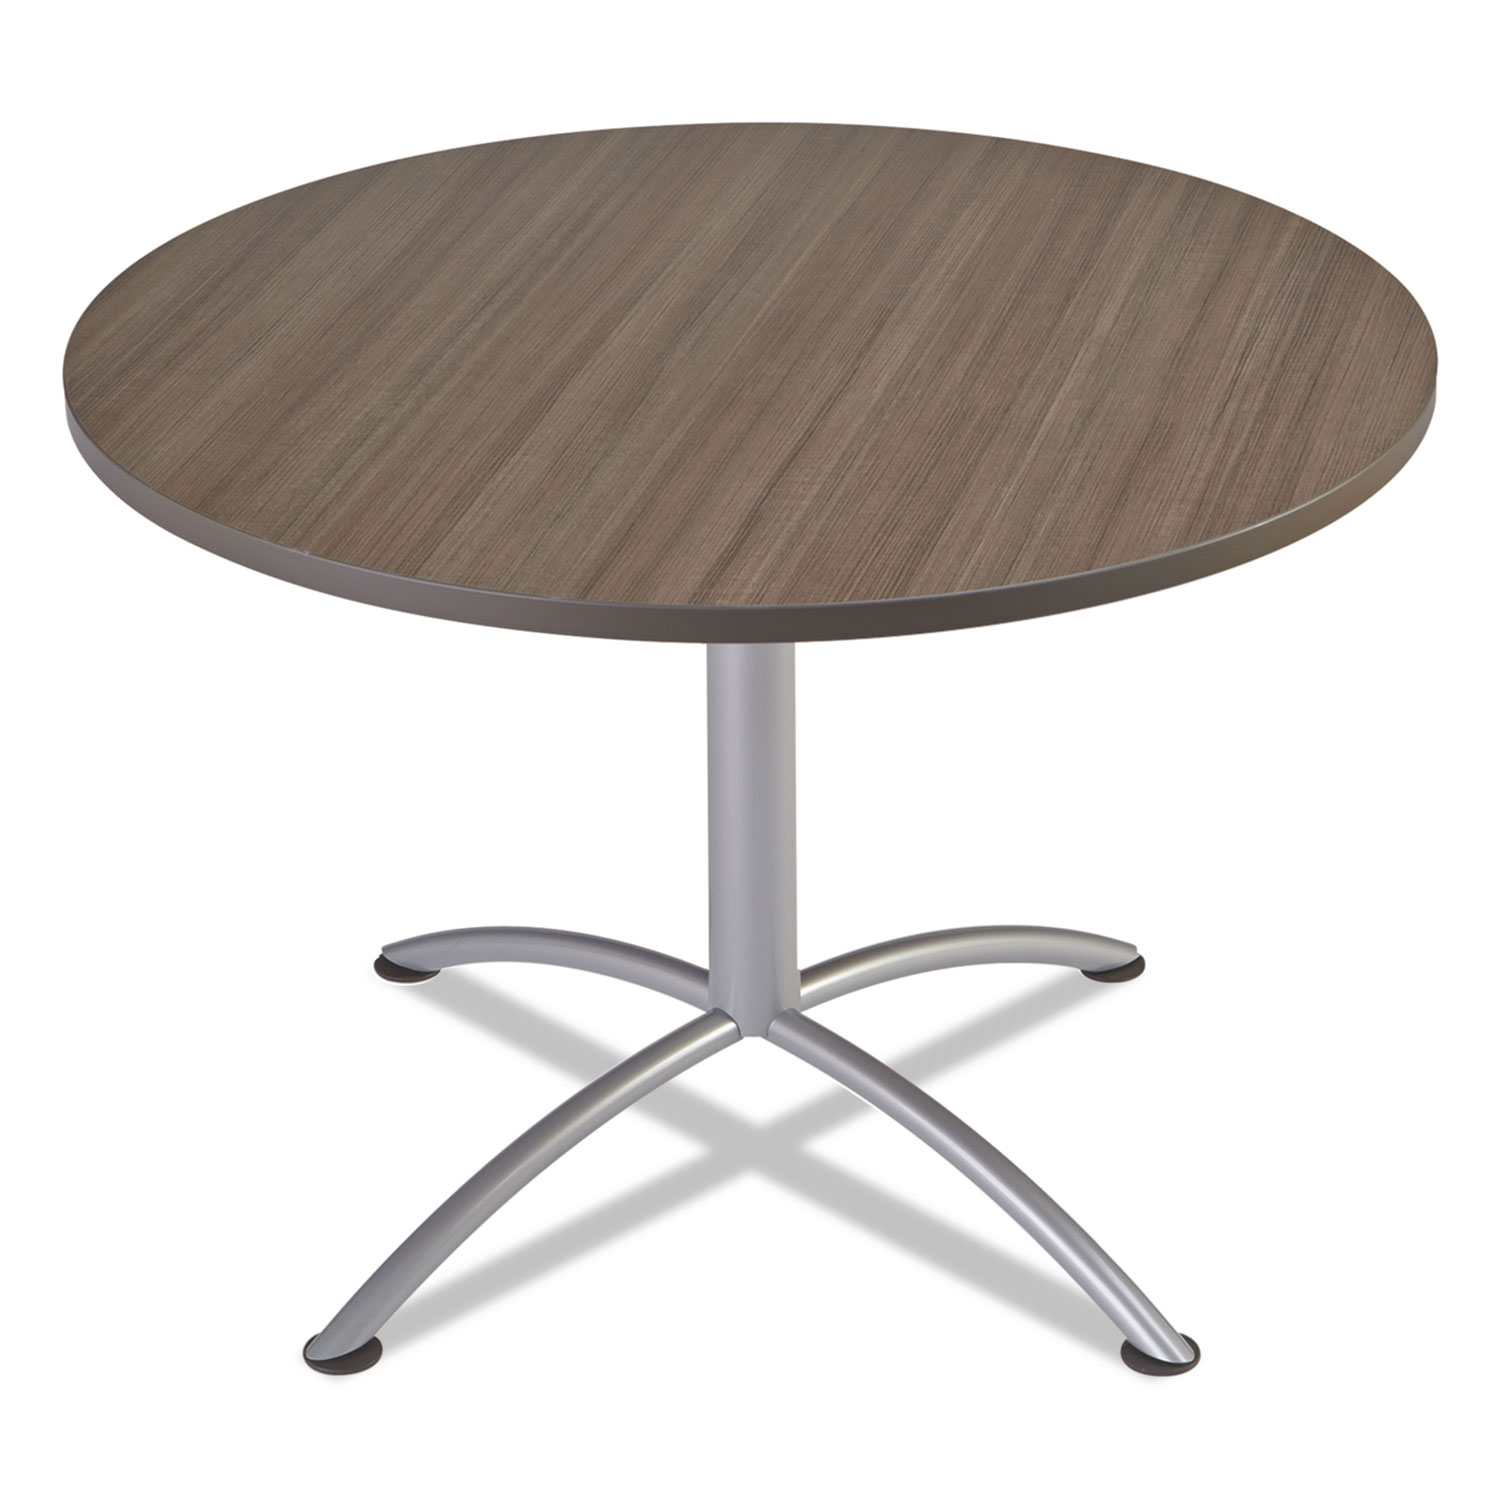 iLand Table, Contour, Round Seated Style, 42 dia. x 29, Natural Teak/Silver